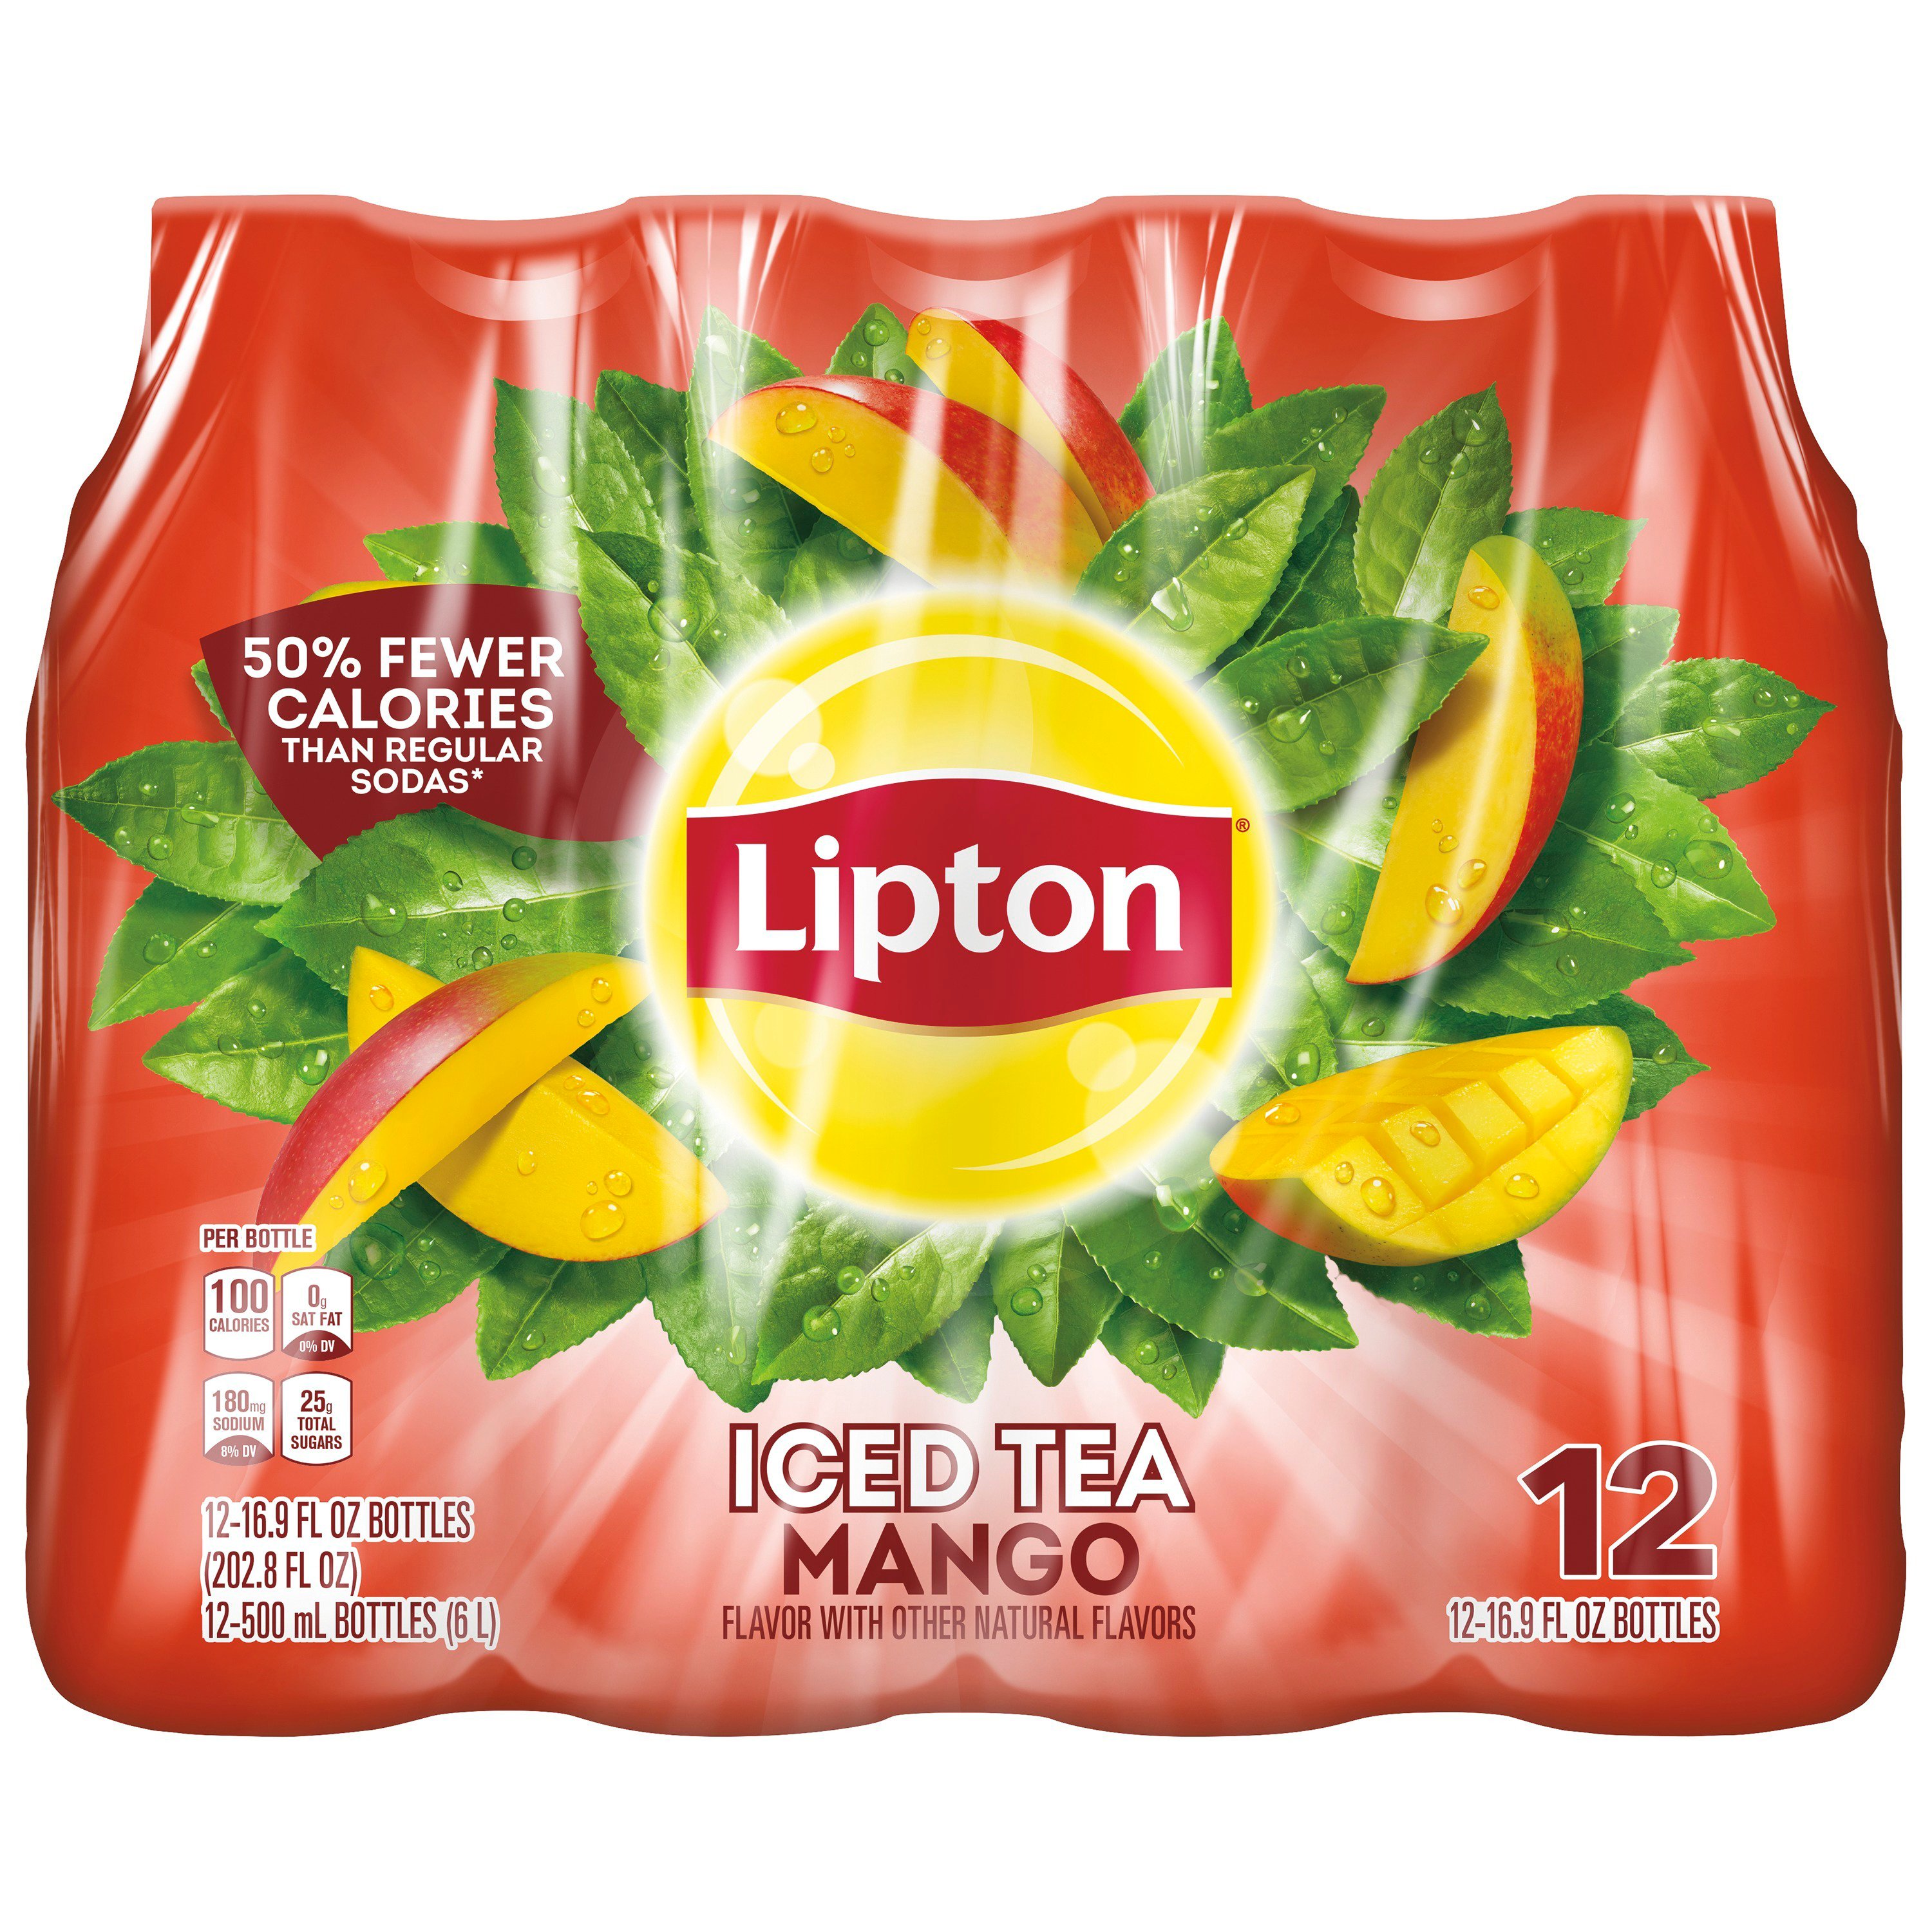 Lipton Iced Tea Mango 16.9 oz Bottles Shop Tea at HEB